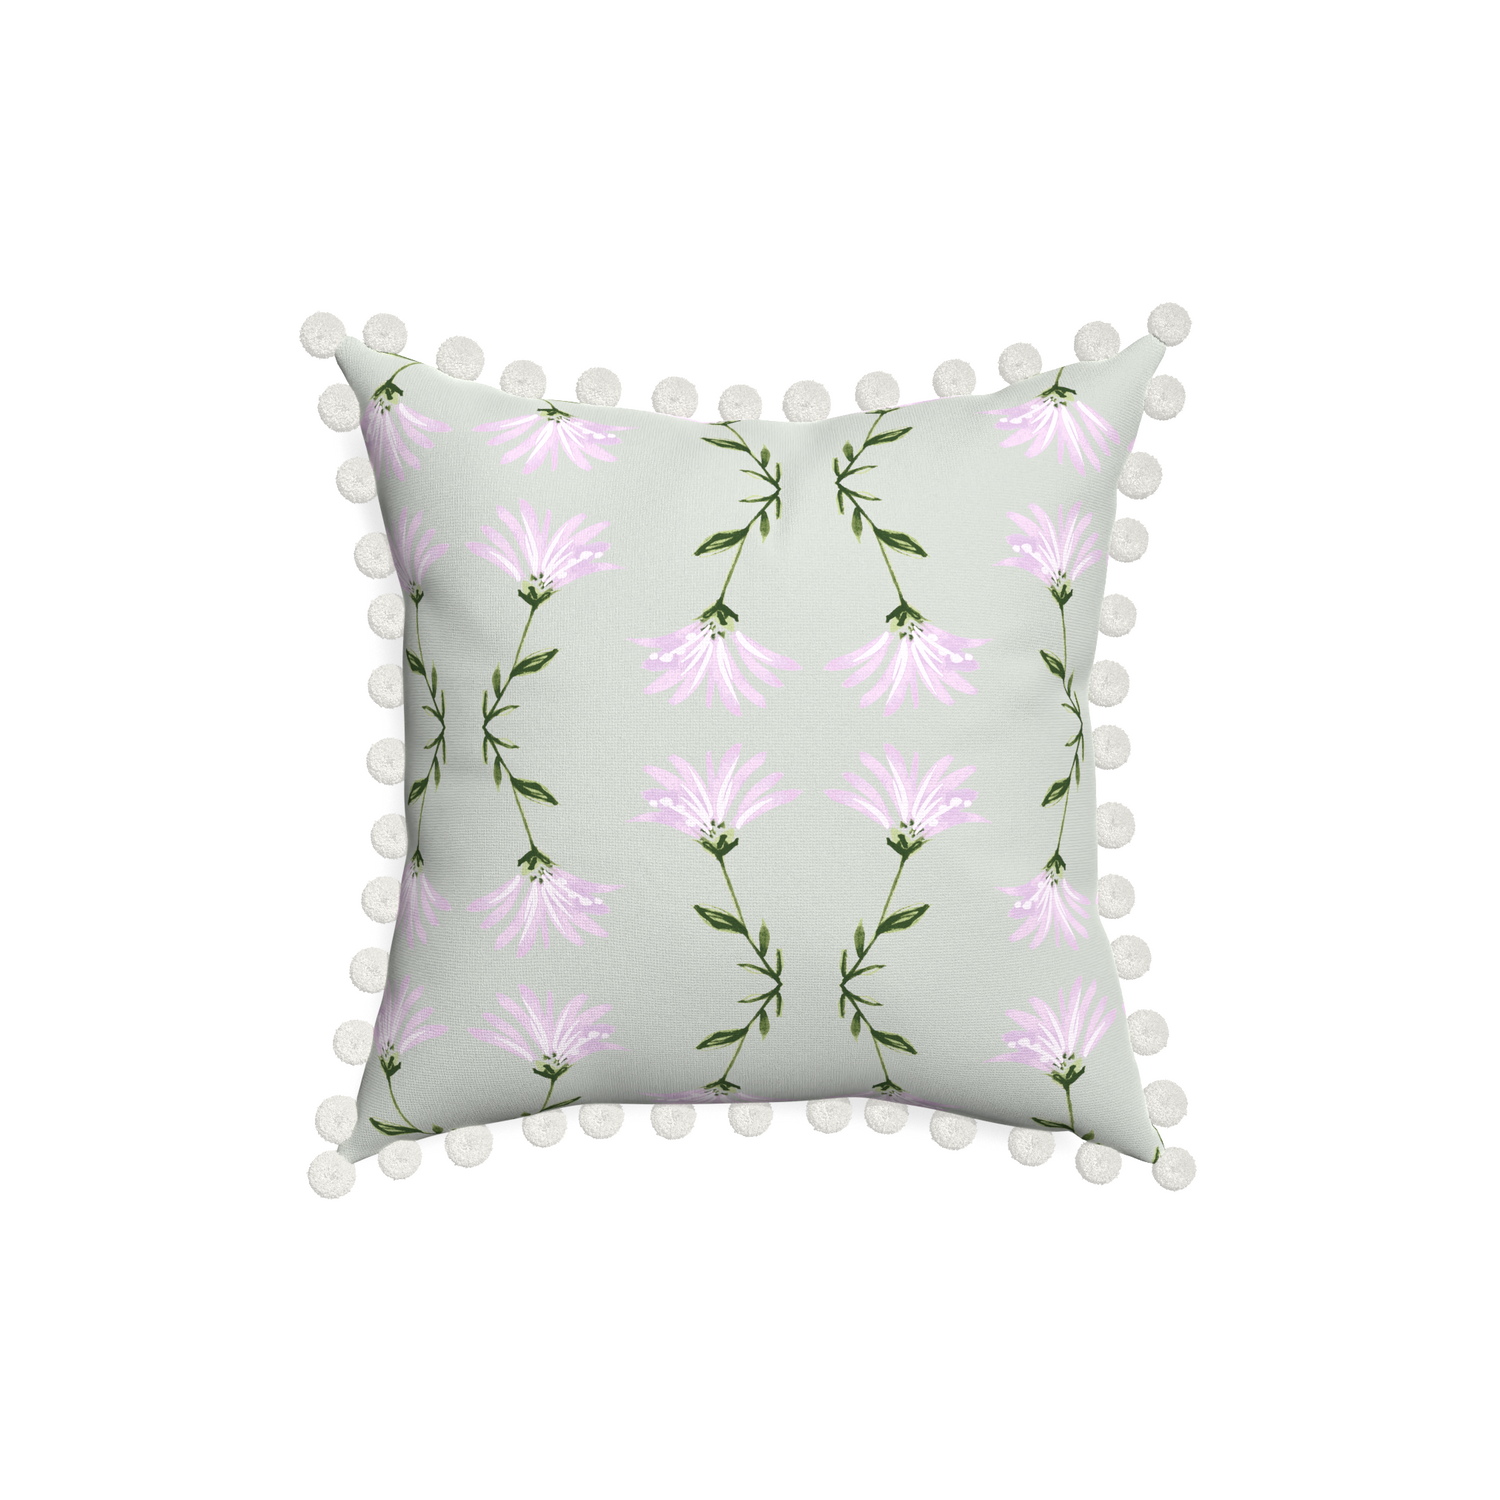 18-square marina sage custom pillow with snow pom pom on white background